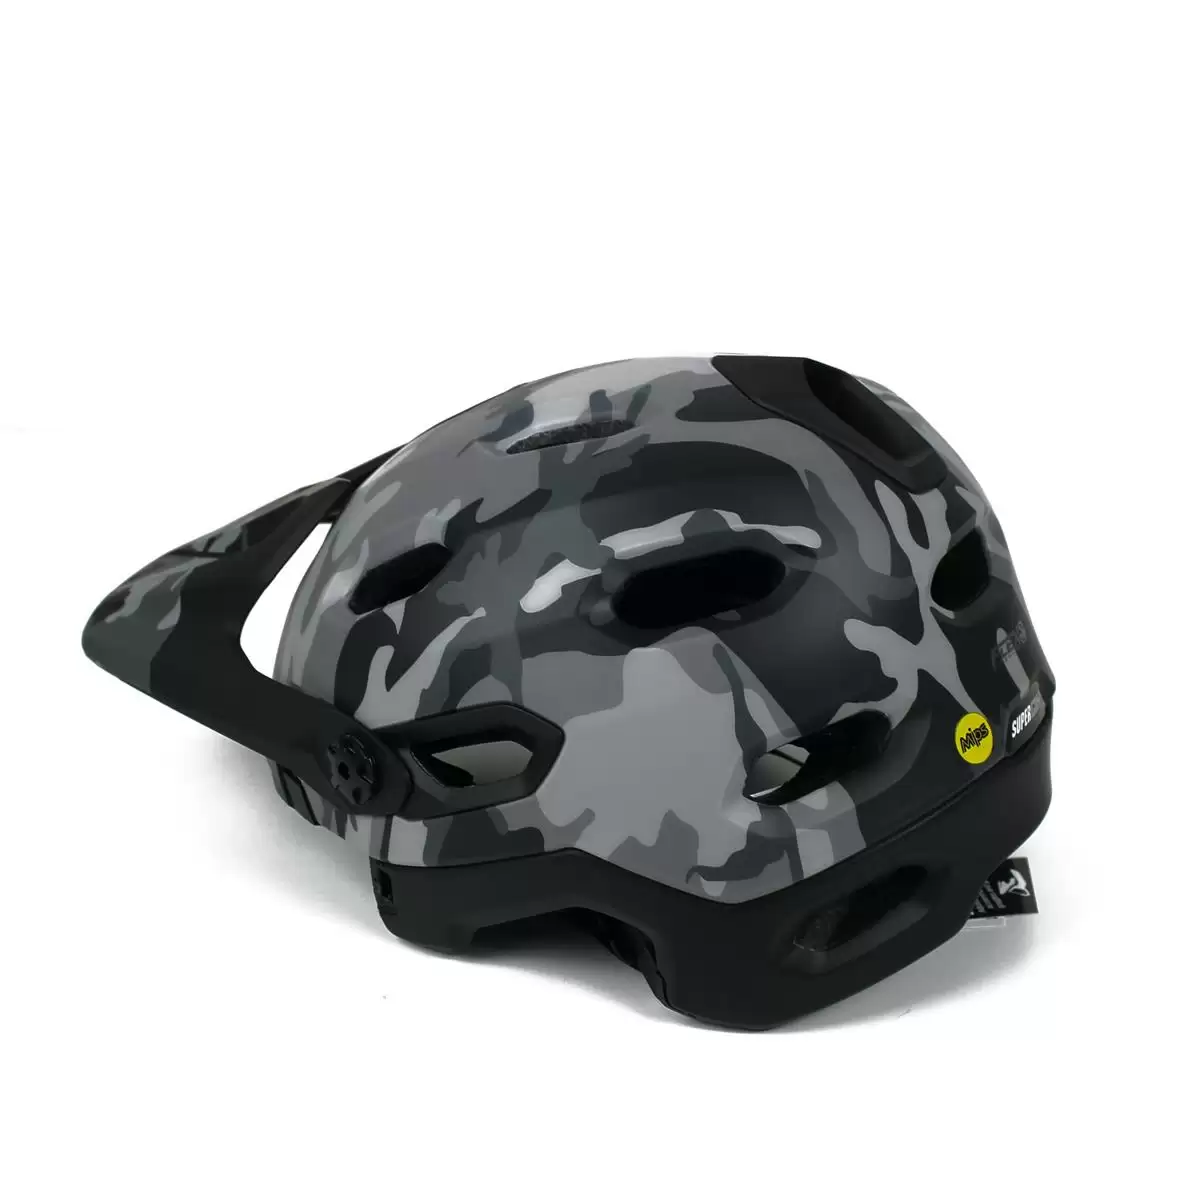 Helmet Super DH MIPS Black Camo Size L (59-62cm) #9